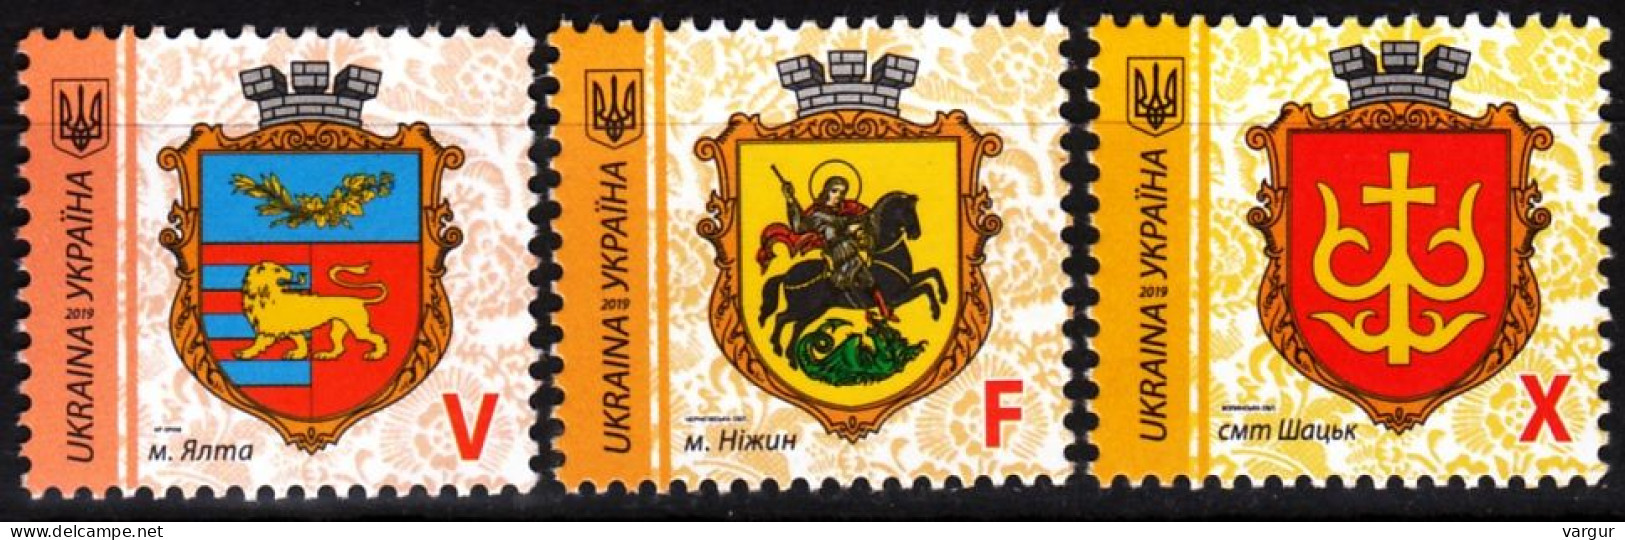 UKRAINE 2019-13 Definitive: Heraldry City Arms, 3v. Re-printing. Issues 1 & 2, MNH - Francobolli